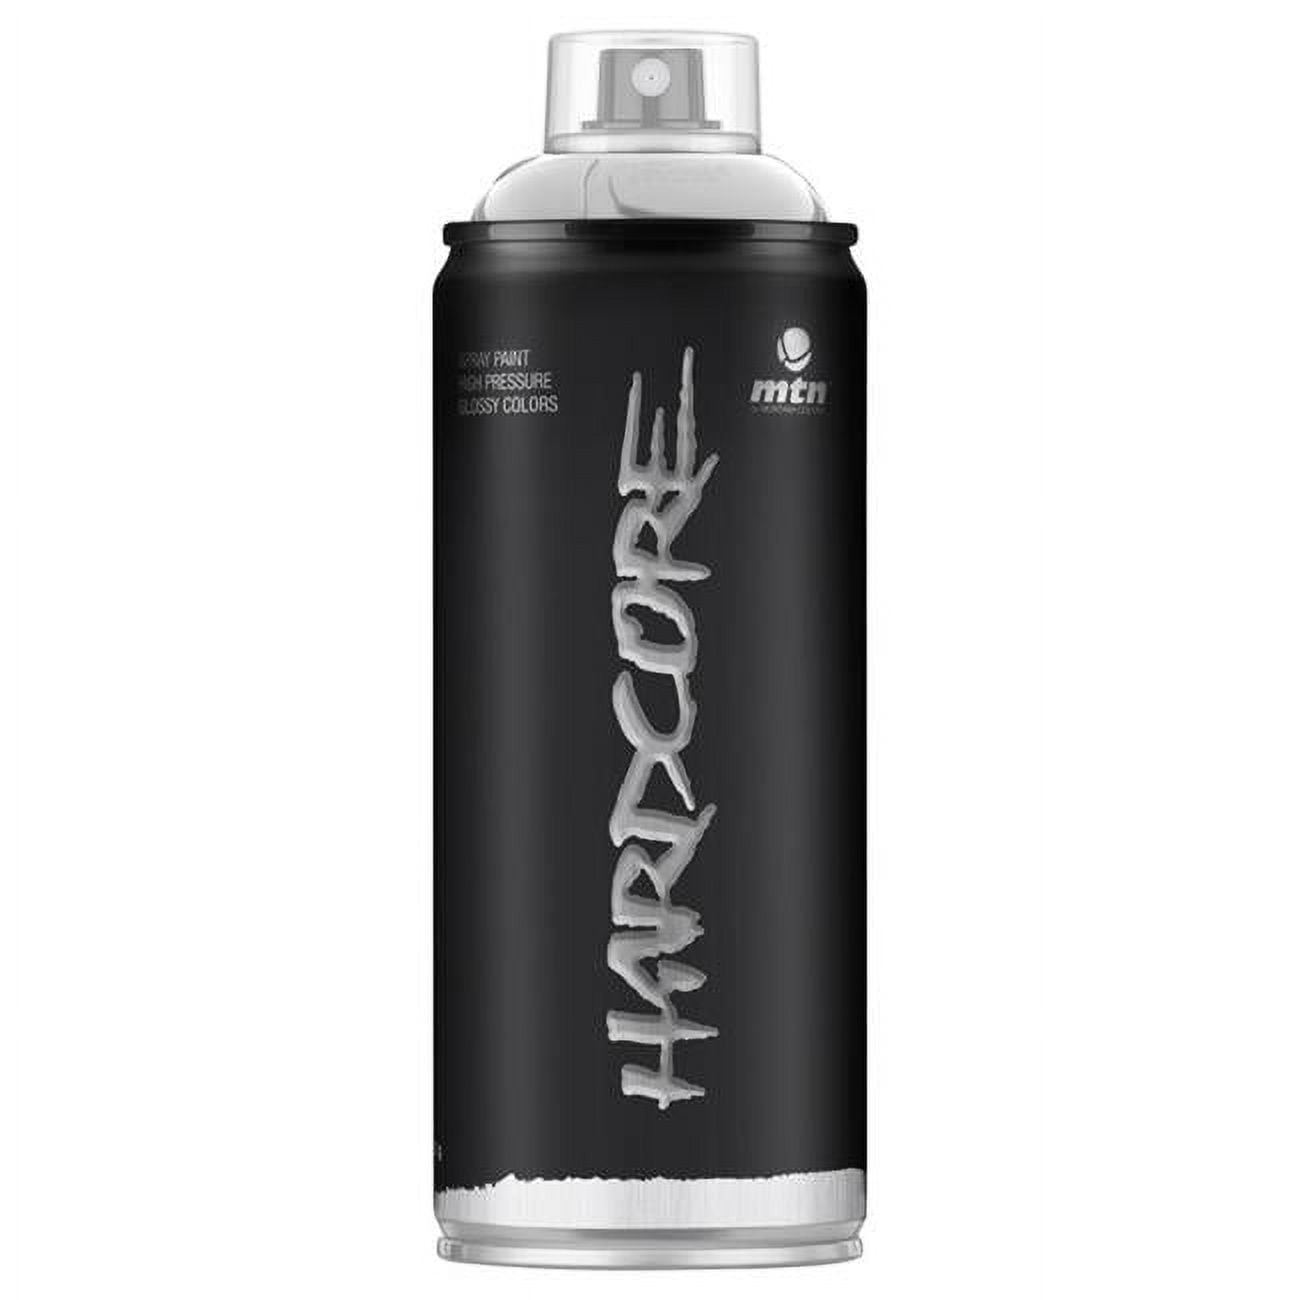 1025980 400 ml Hardcore Spray Paint, Metallic Chrome & Silver - Pack of 6 -  Montana